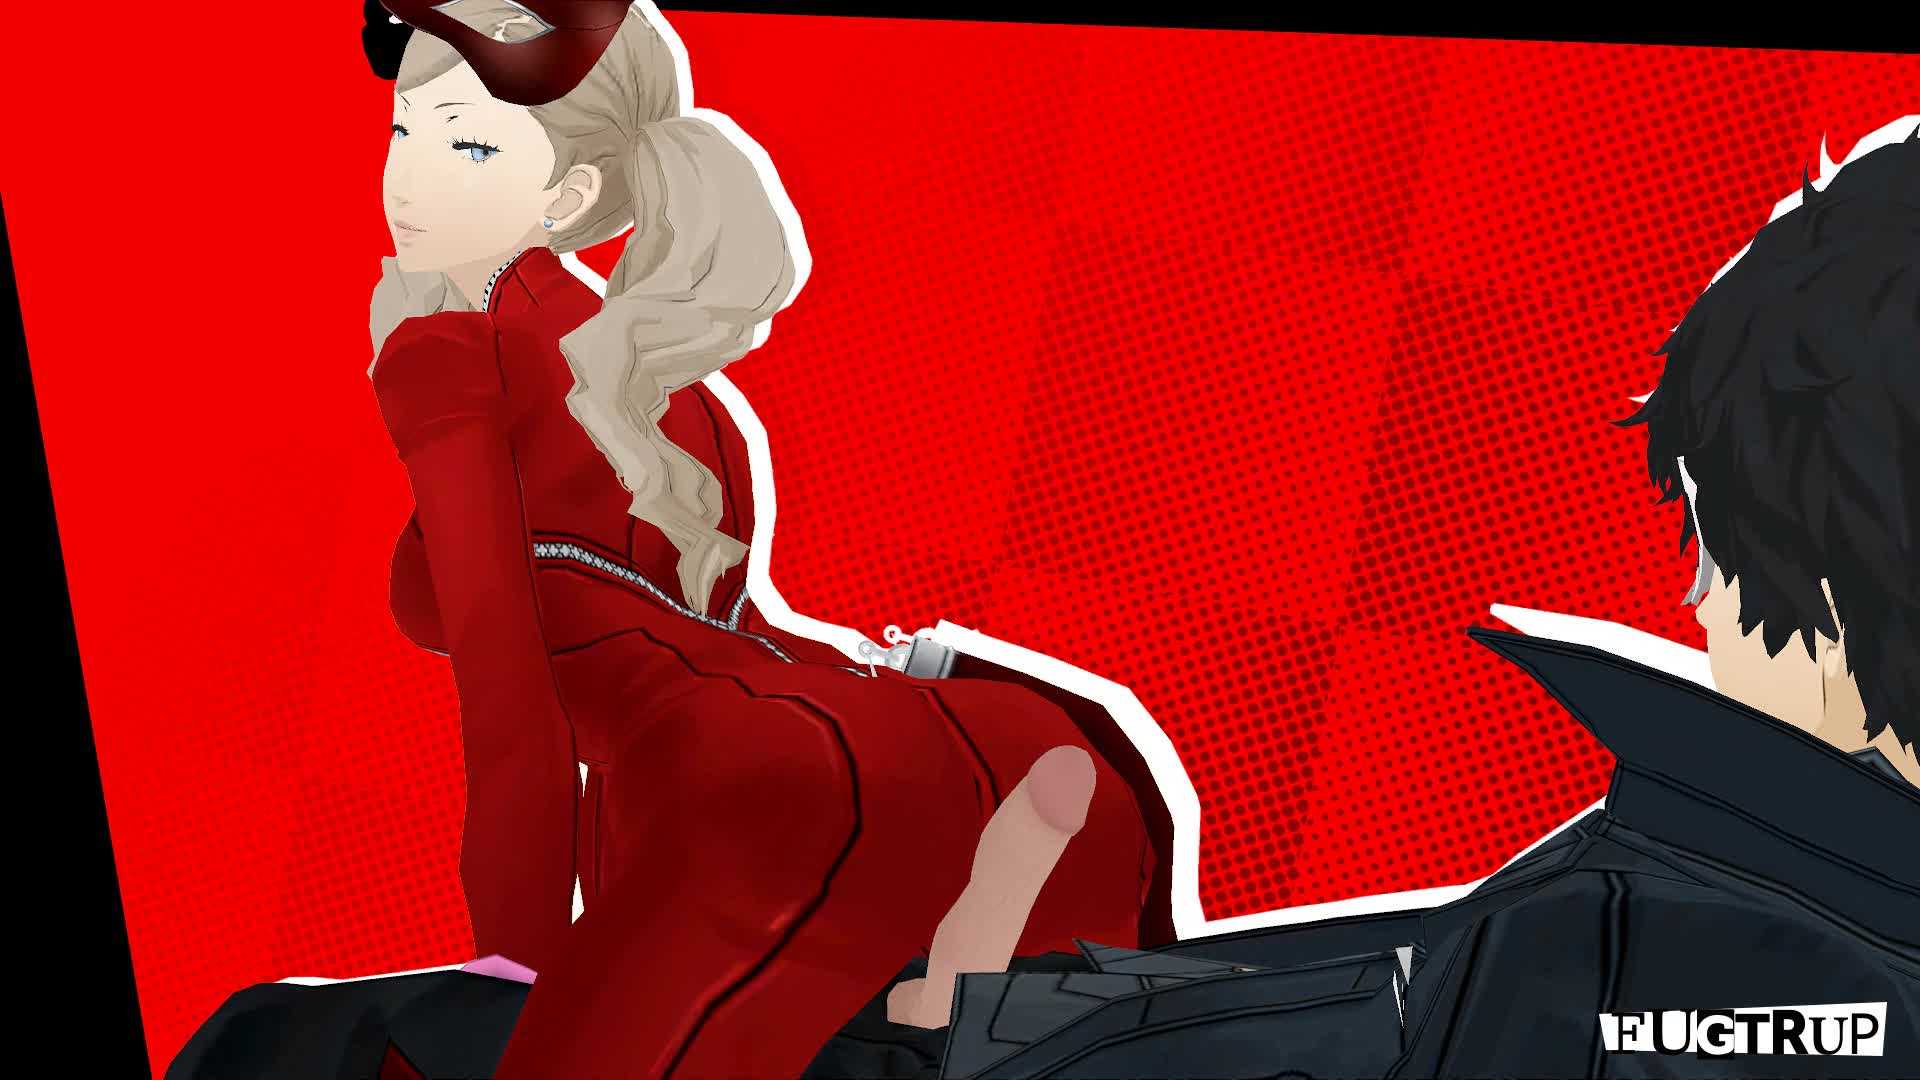 Ann takamaki lewd